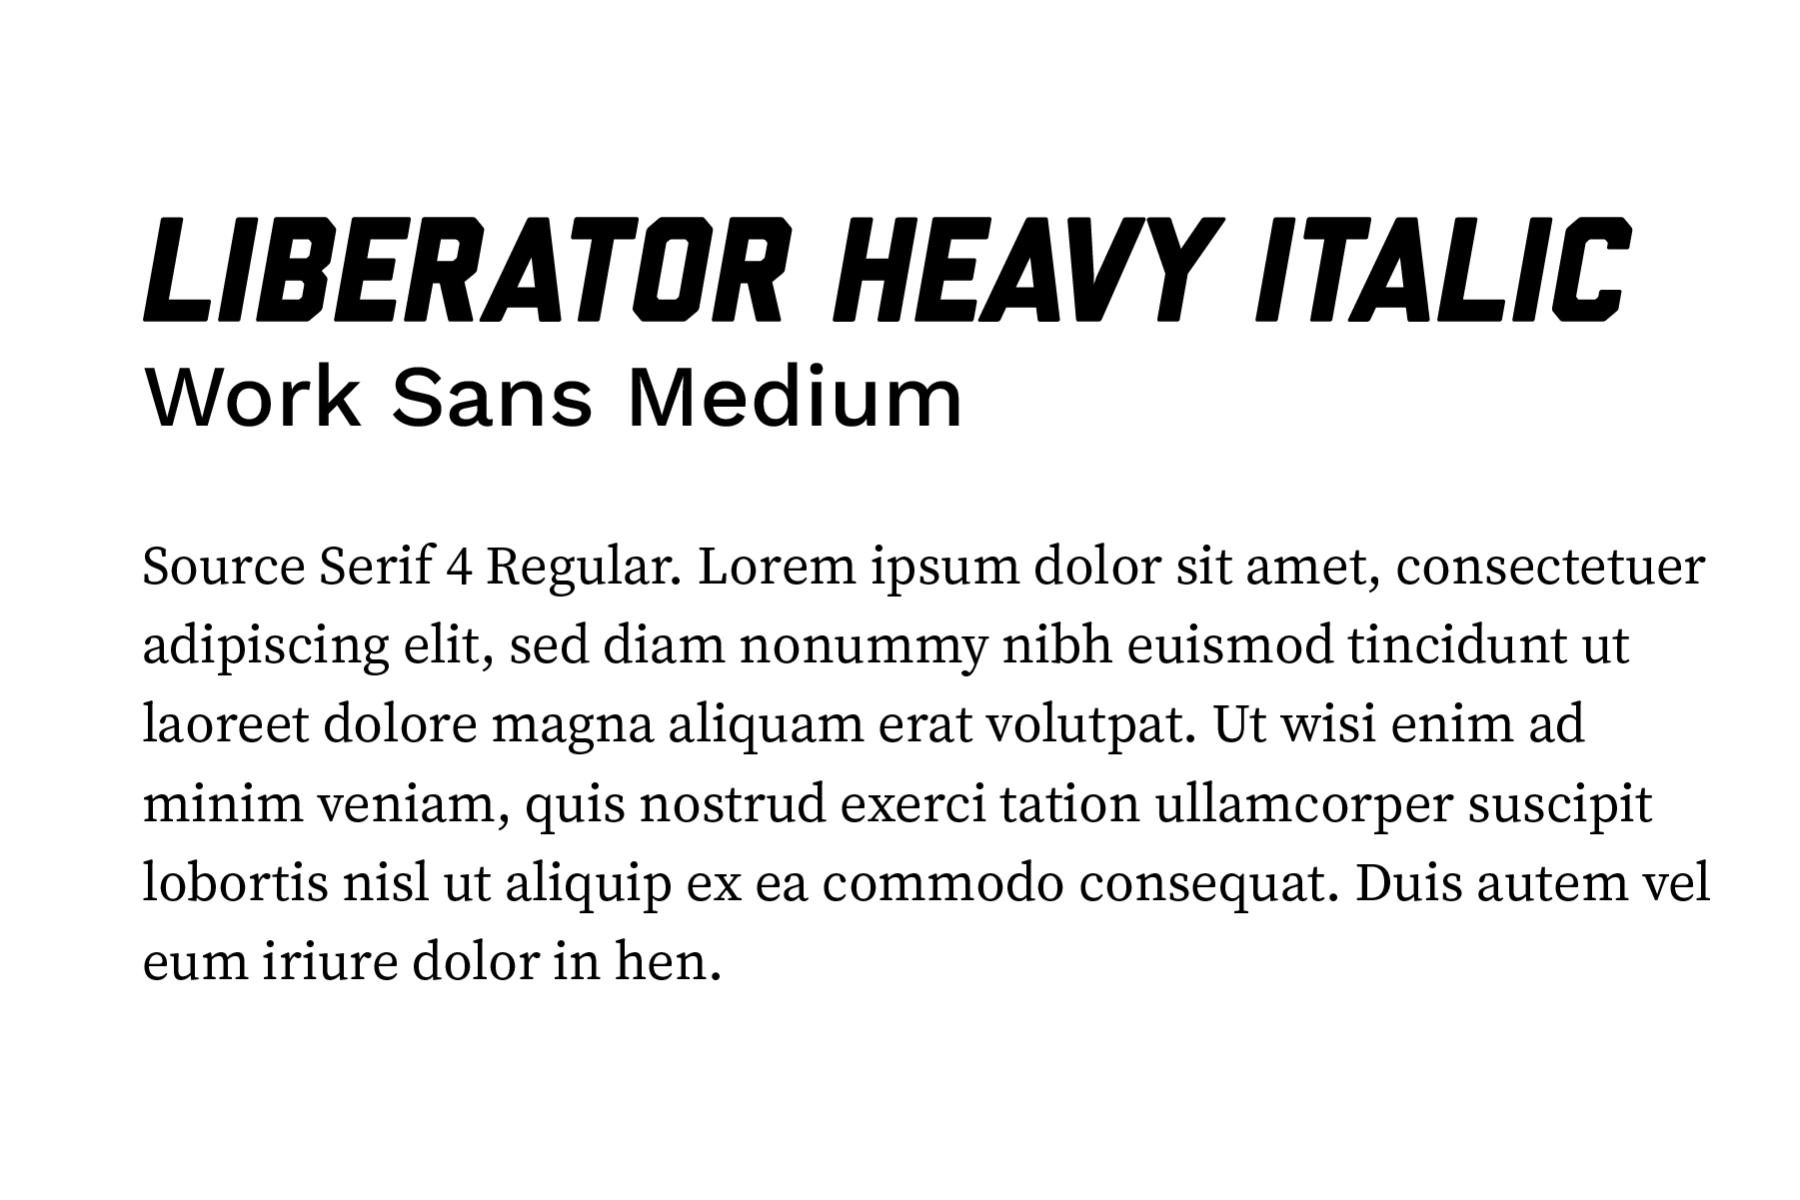 Typeface example showing Liberator headline, Work Sans subhead, and Source Serif body copy